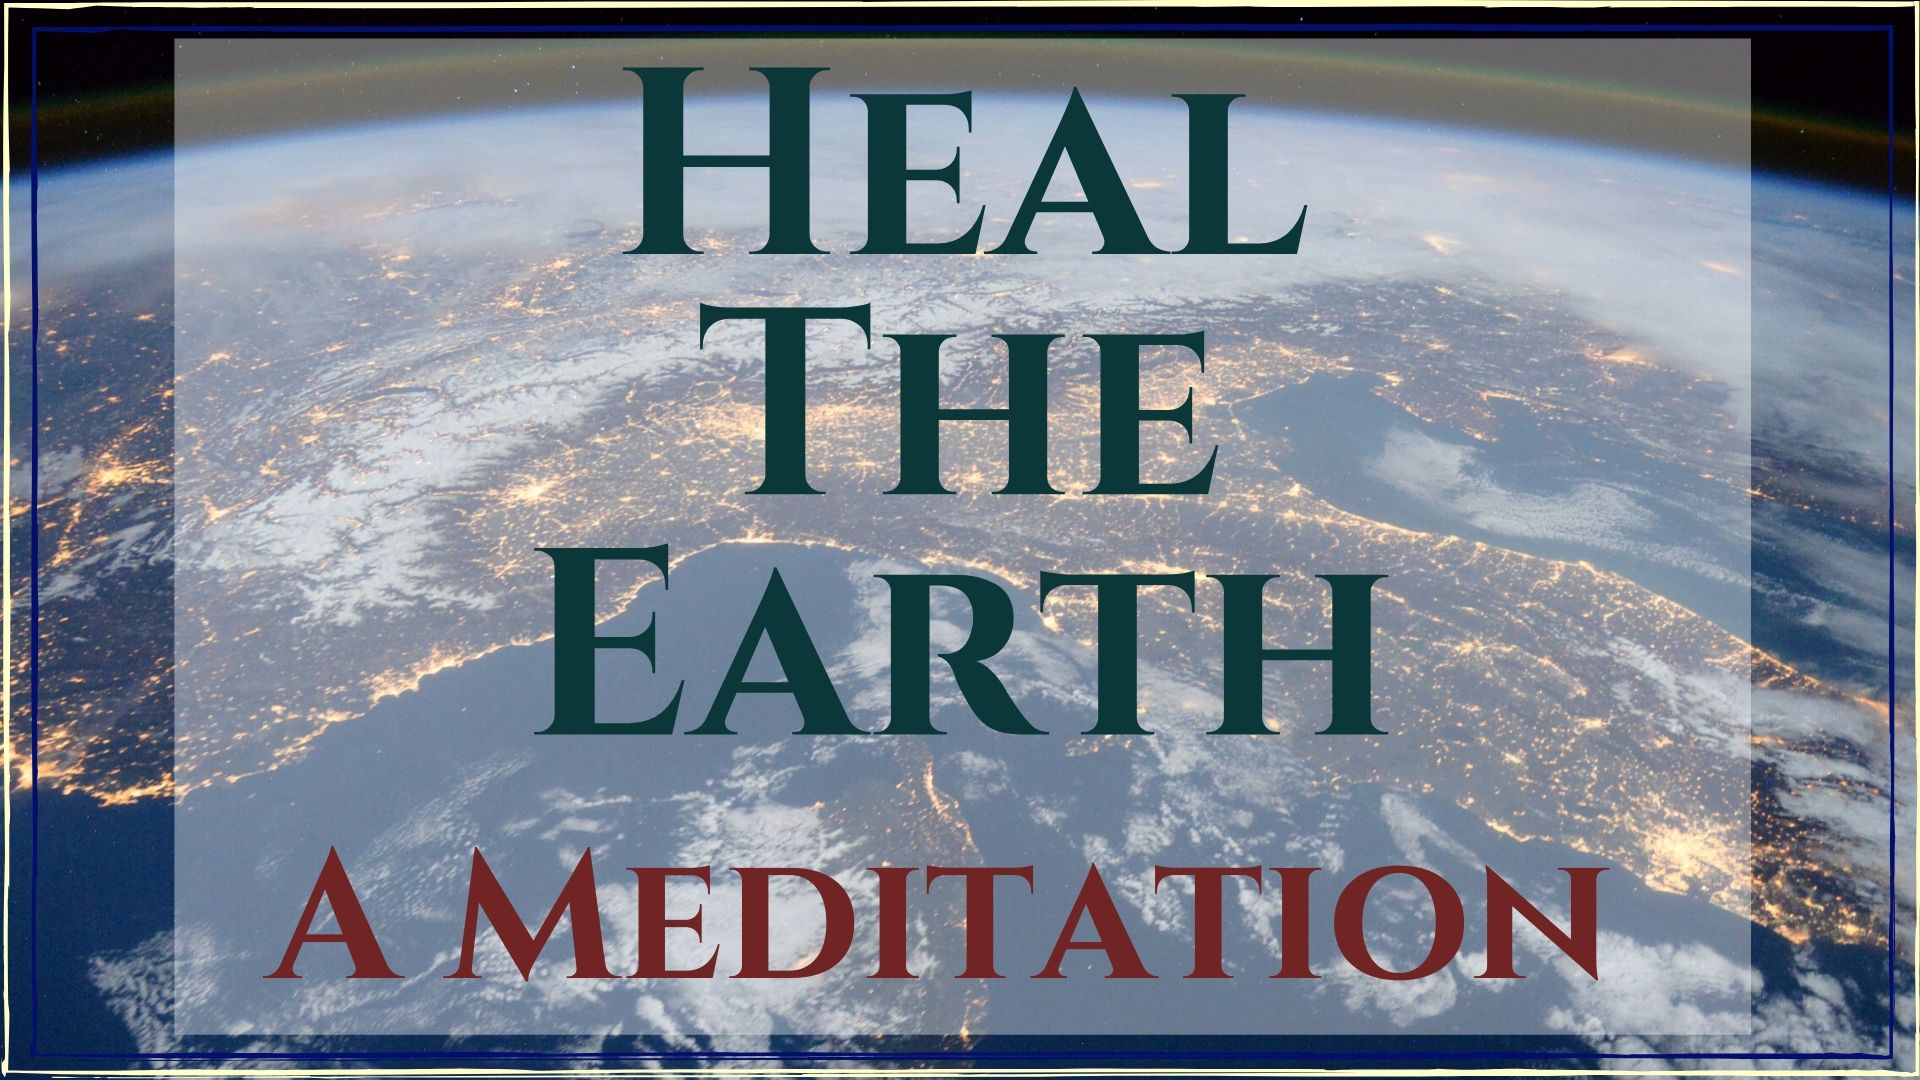 world healing meditation